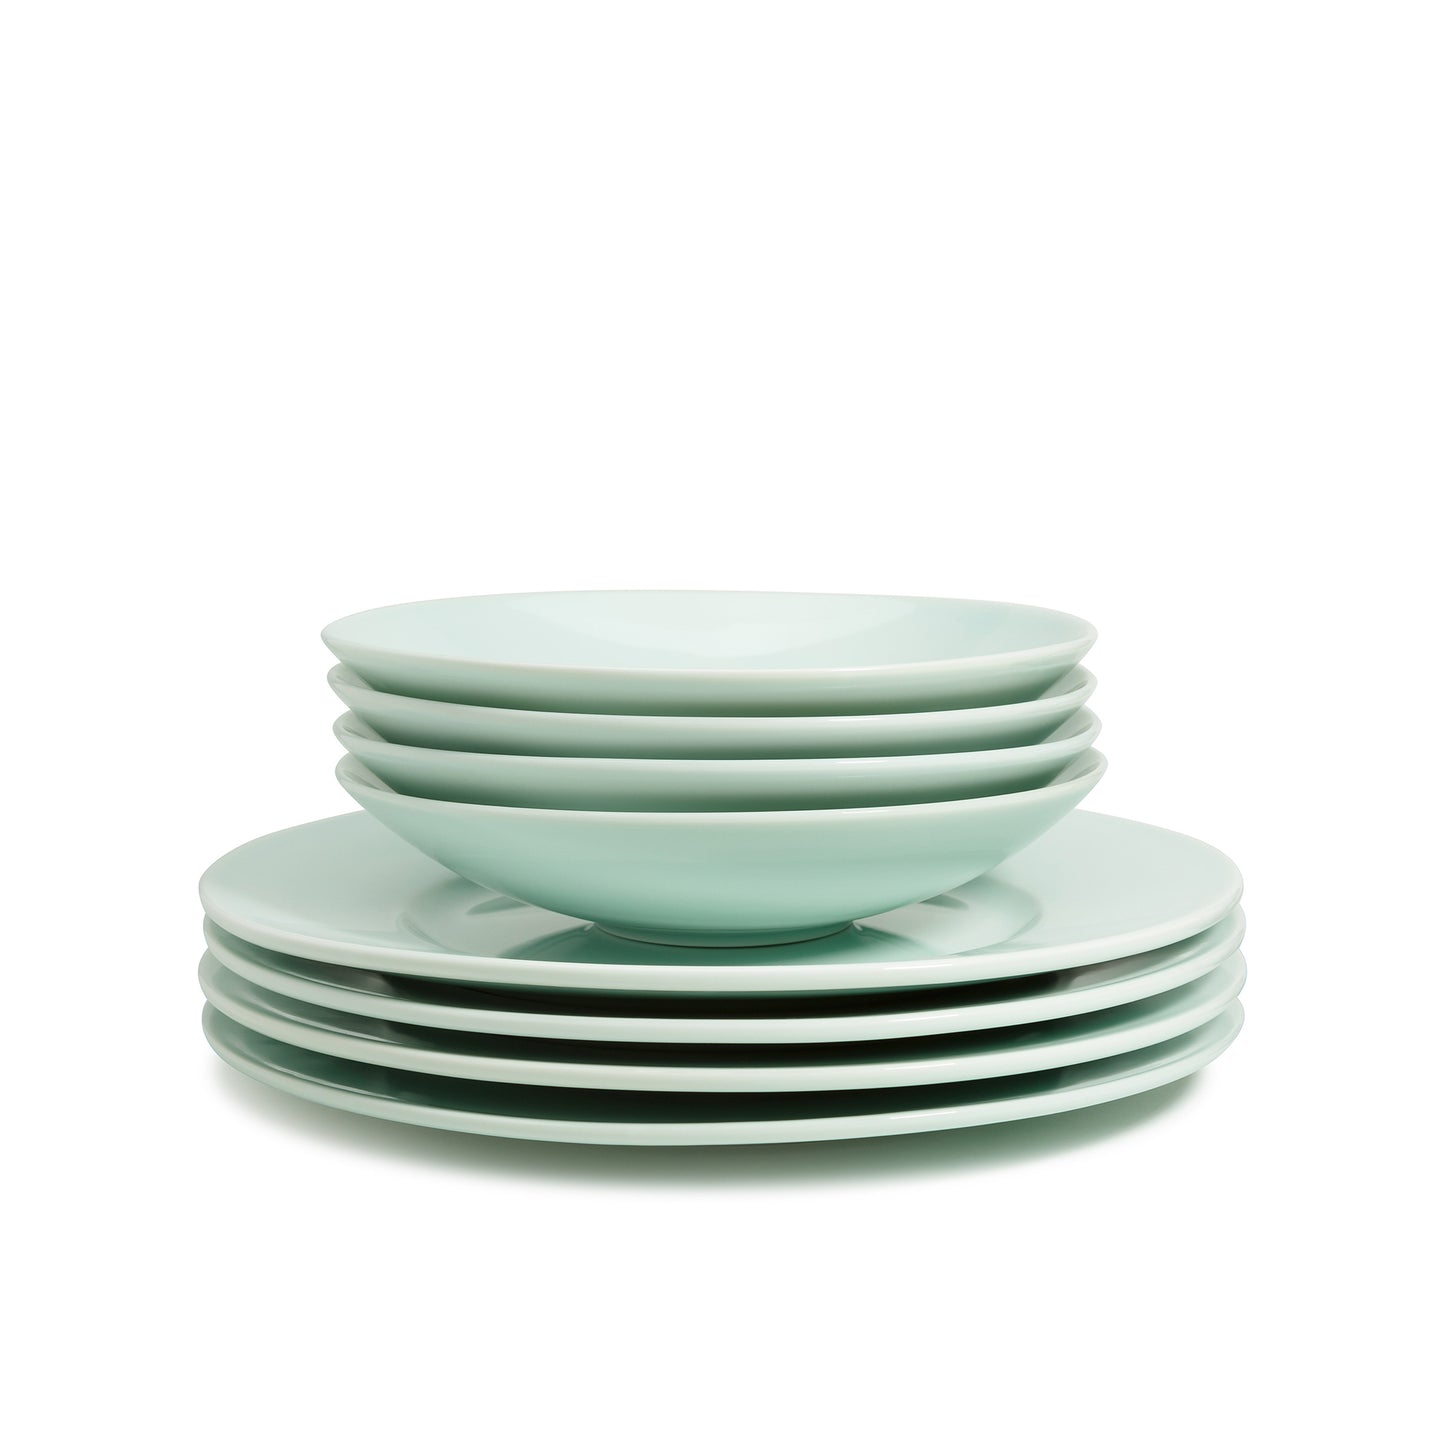 8 piece green celadon porcelain dinnerware set, 11 3/4" wide rim dinner plates, 8" salad/soup bowls, media 6 of 6